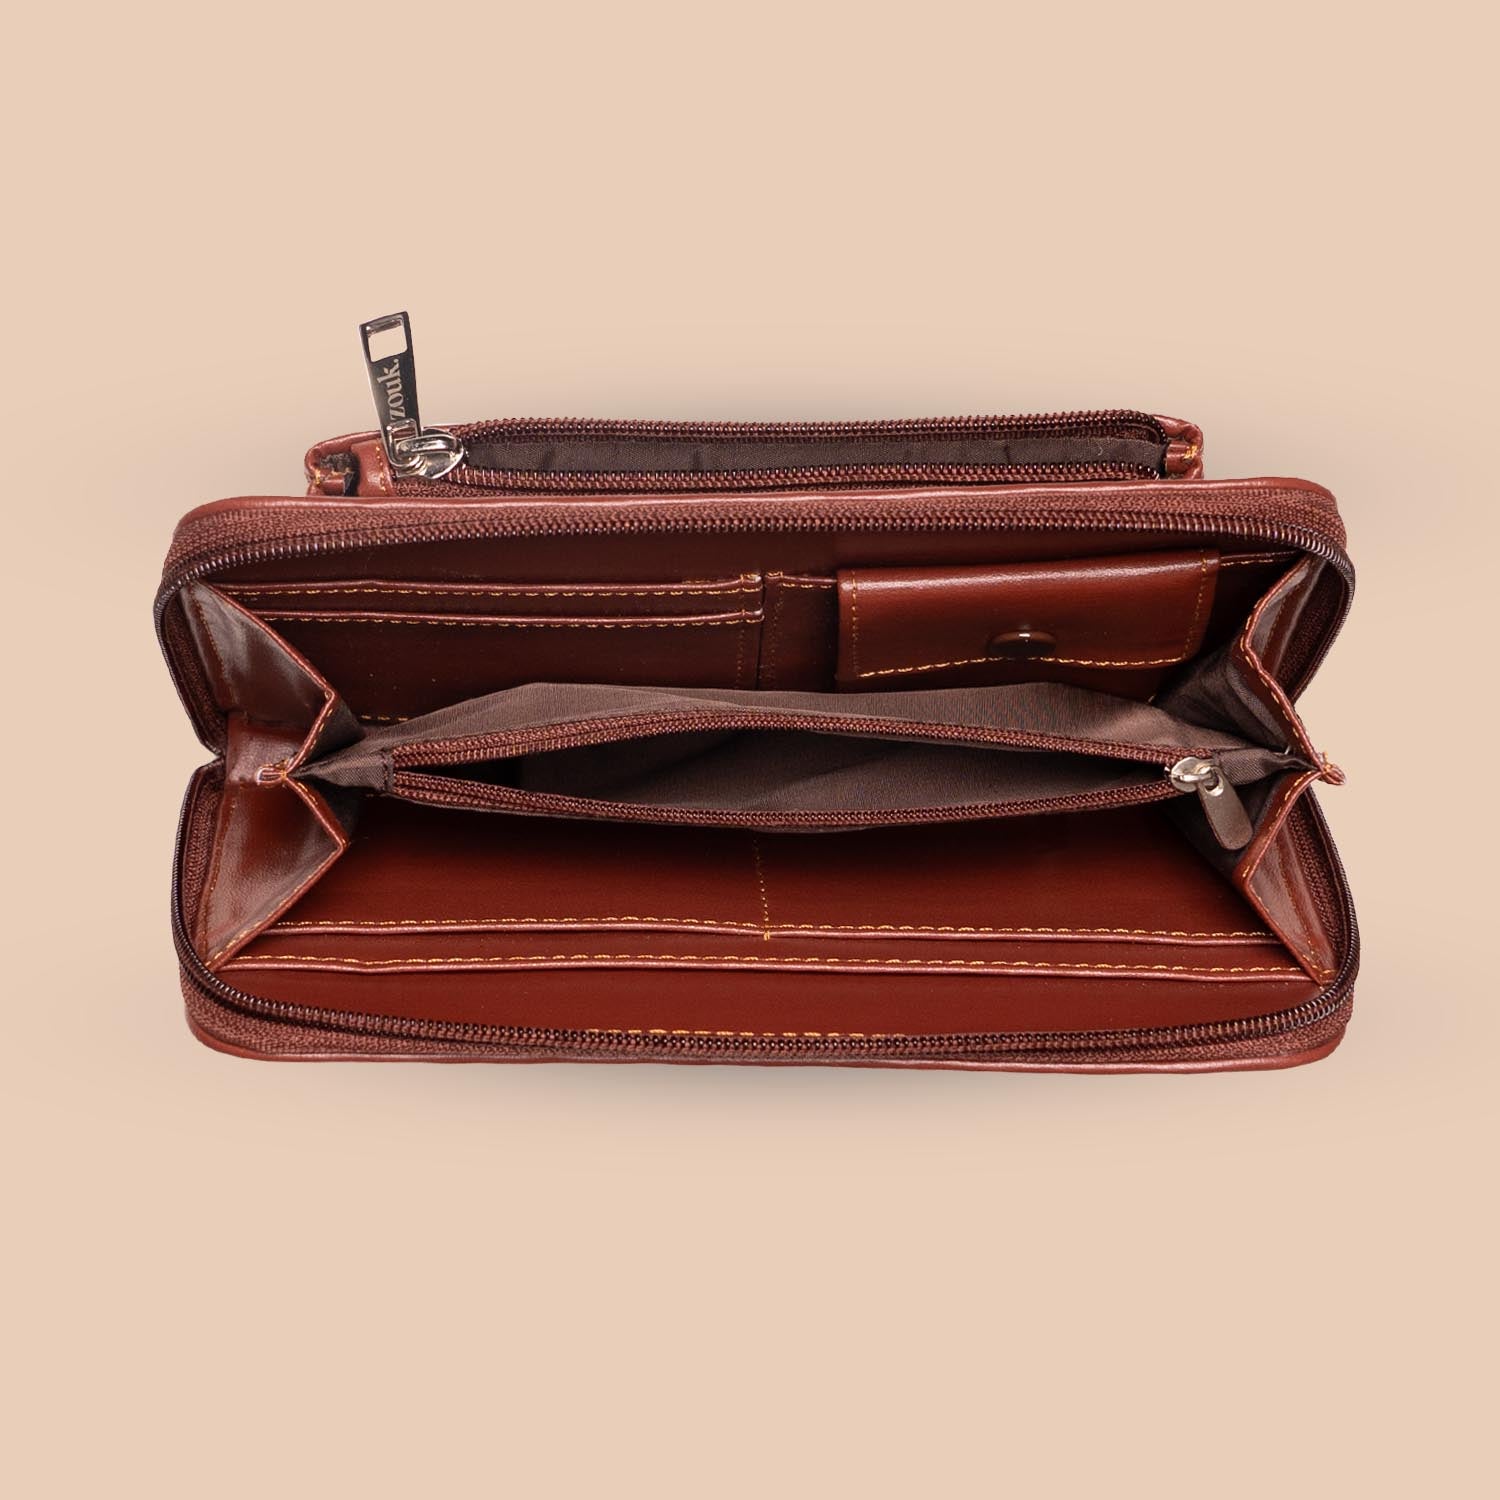 Paisley Print & FloLov - Women's Office Bag & Classic Zipper Wallet Combo